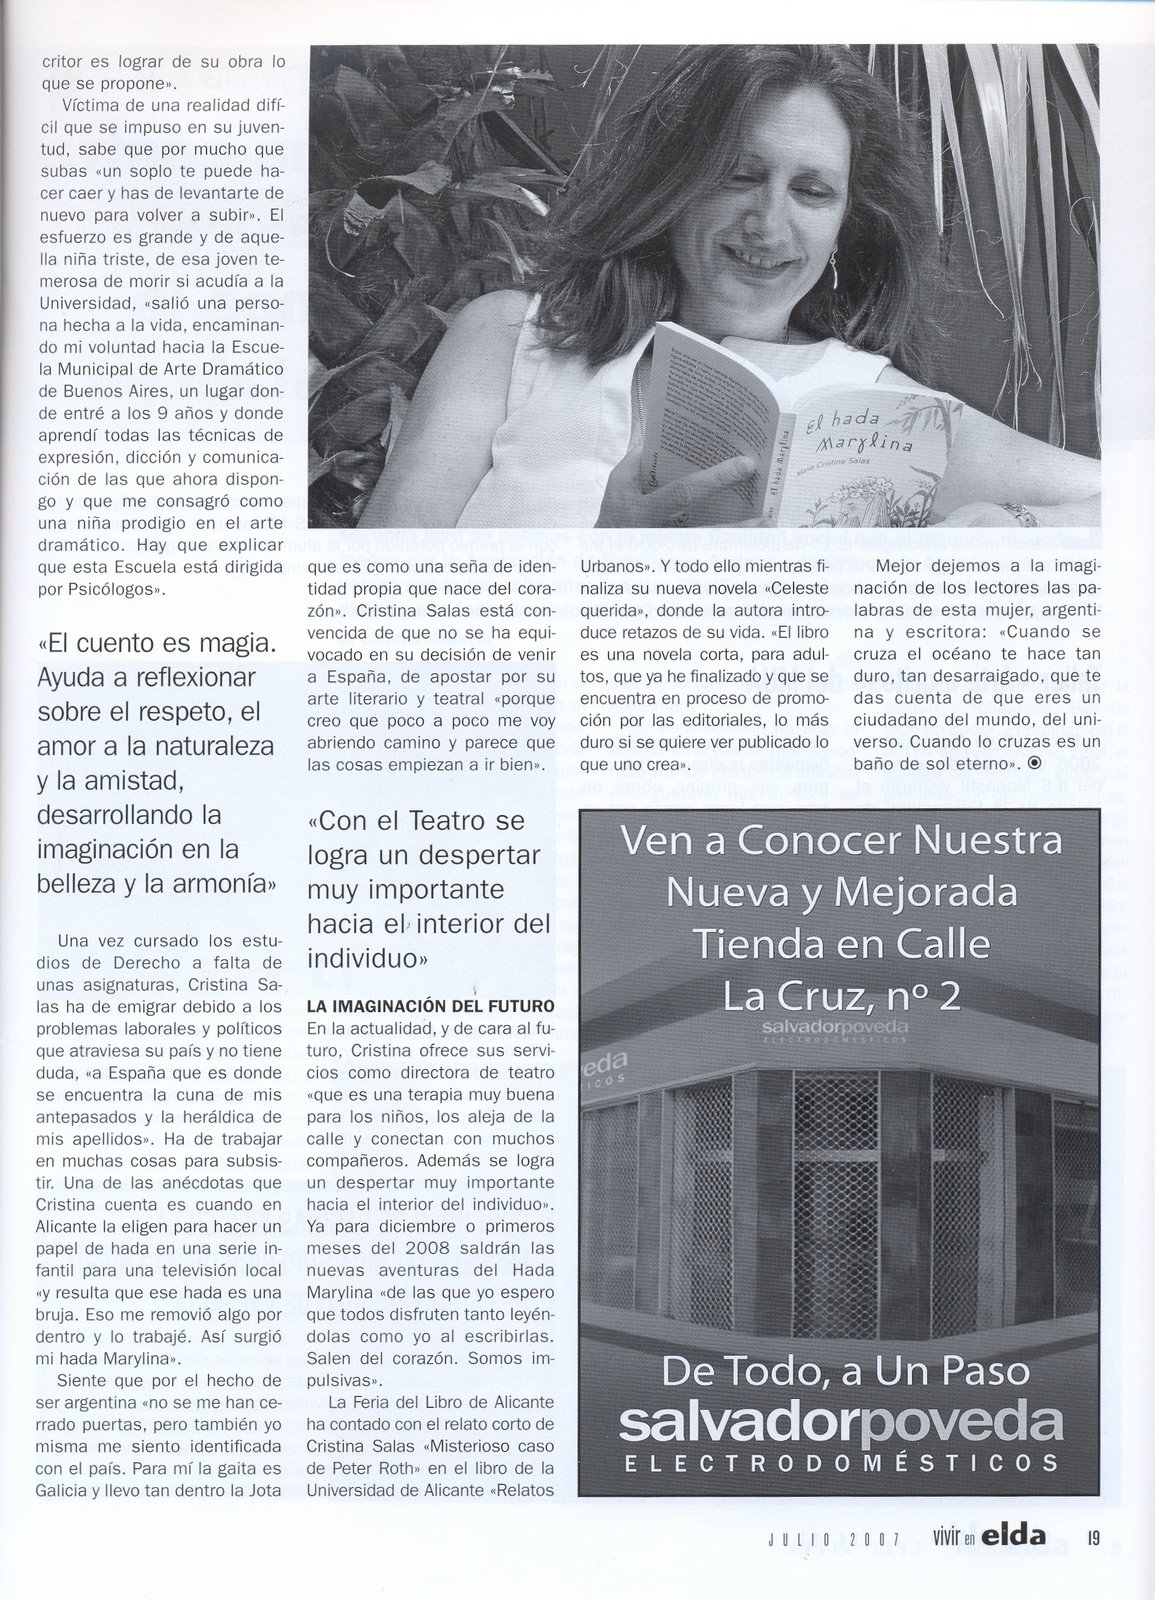 [REPORTAJE+revista+VIVIR+de+Elda+6.7.2007.jpg]